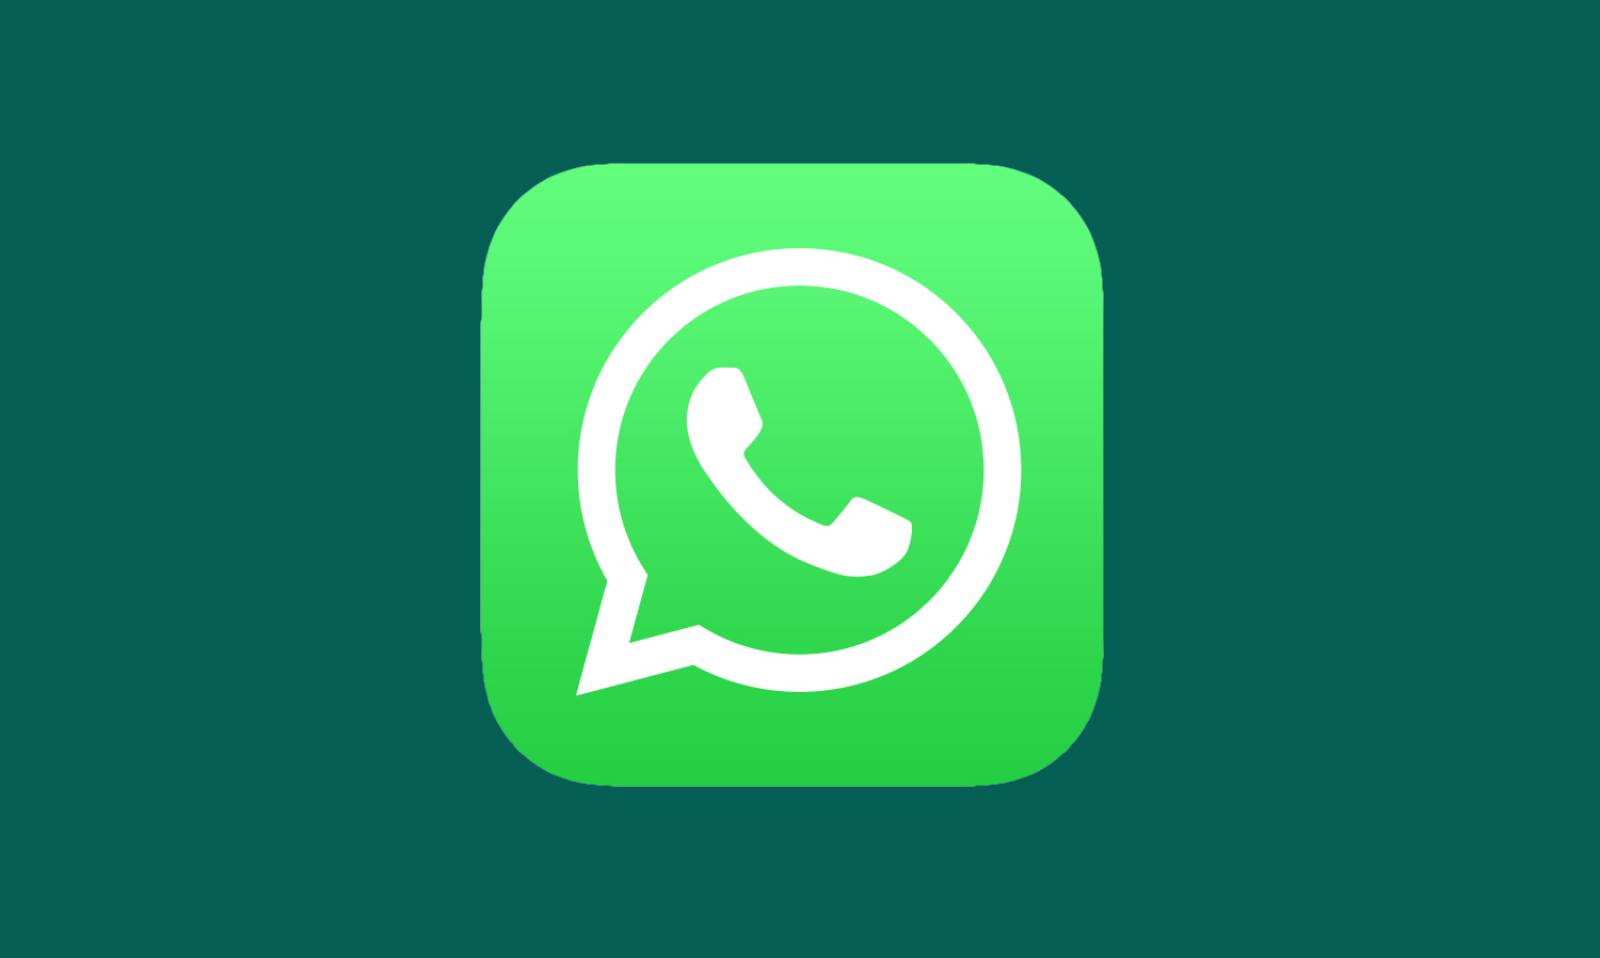 WhatsApp signals